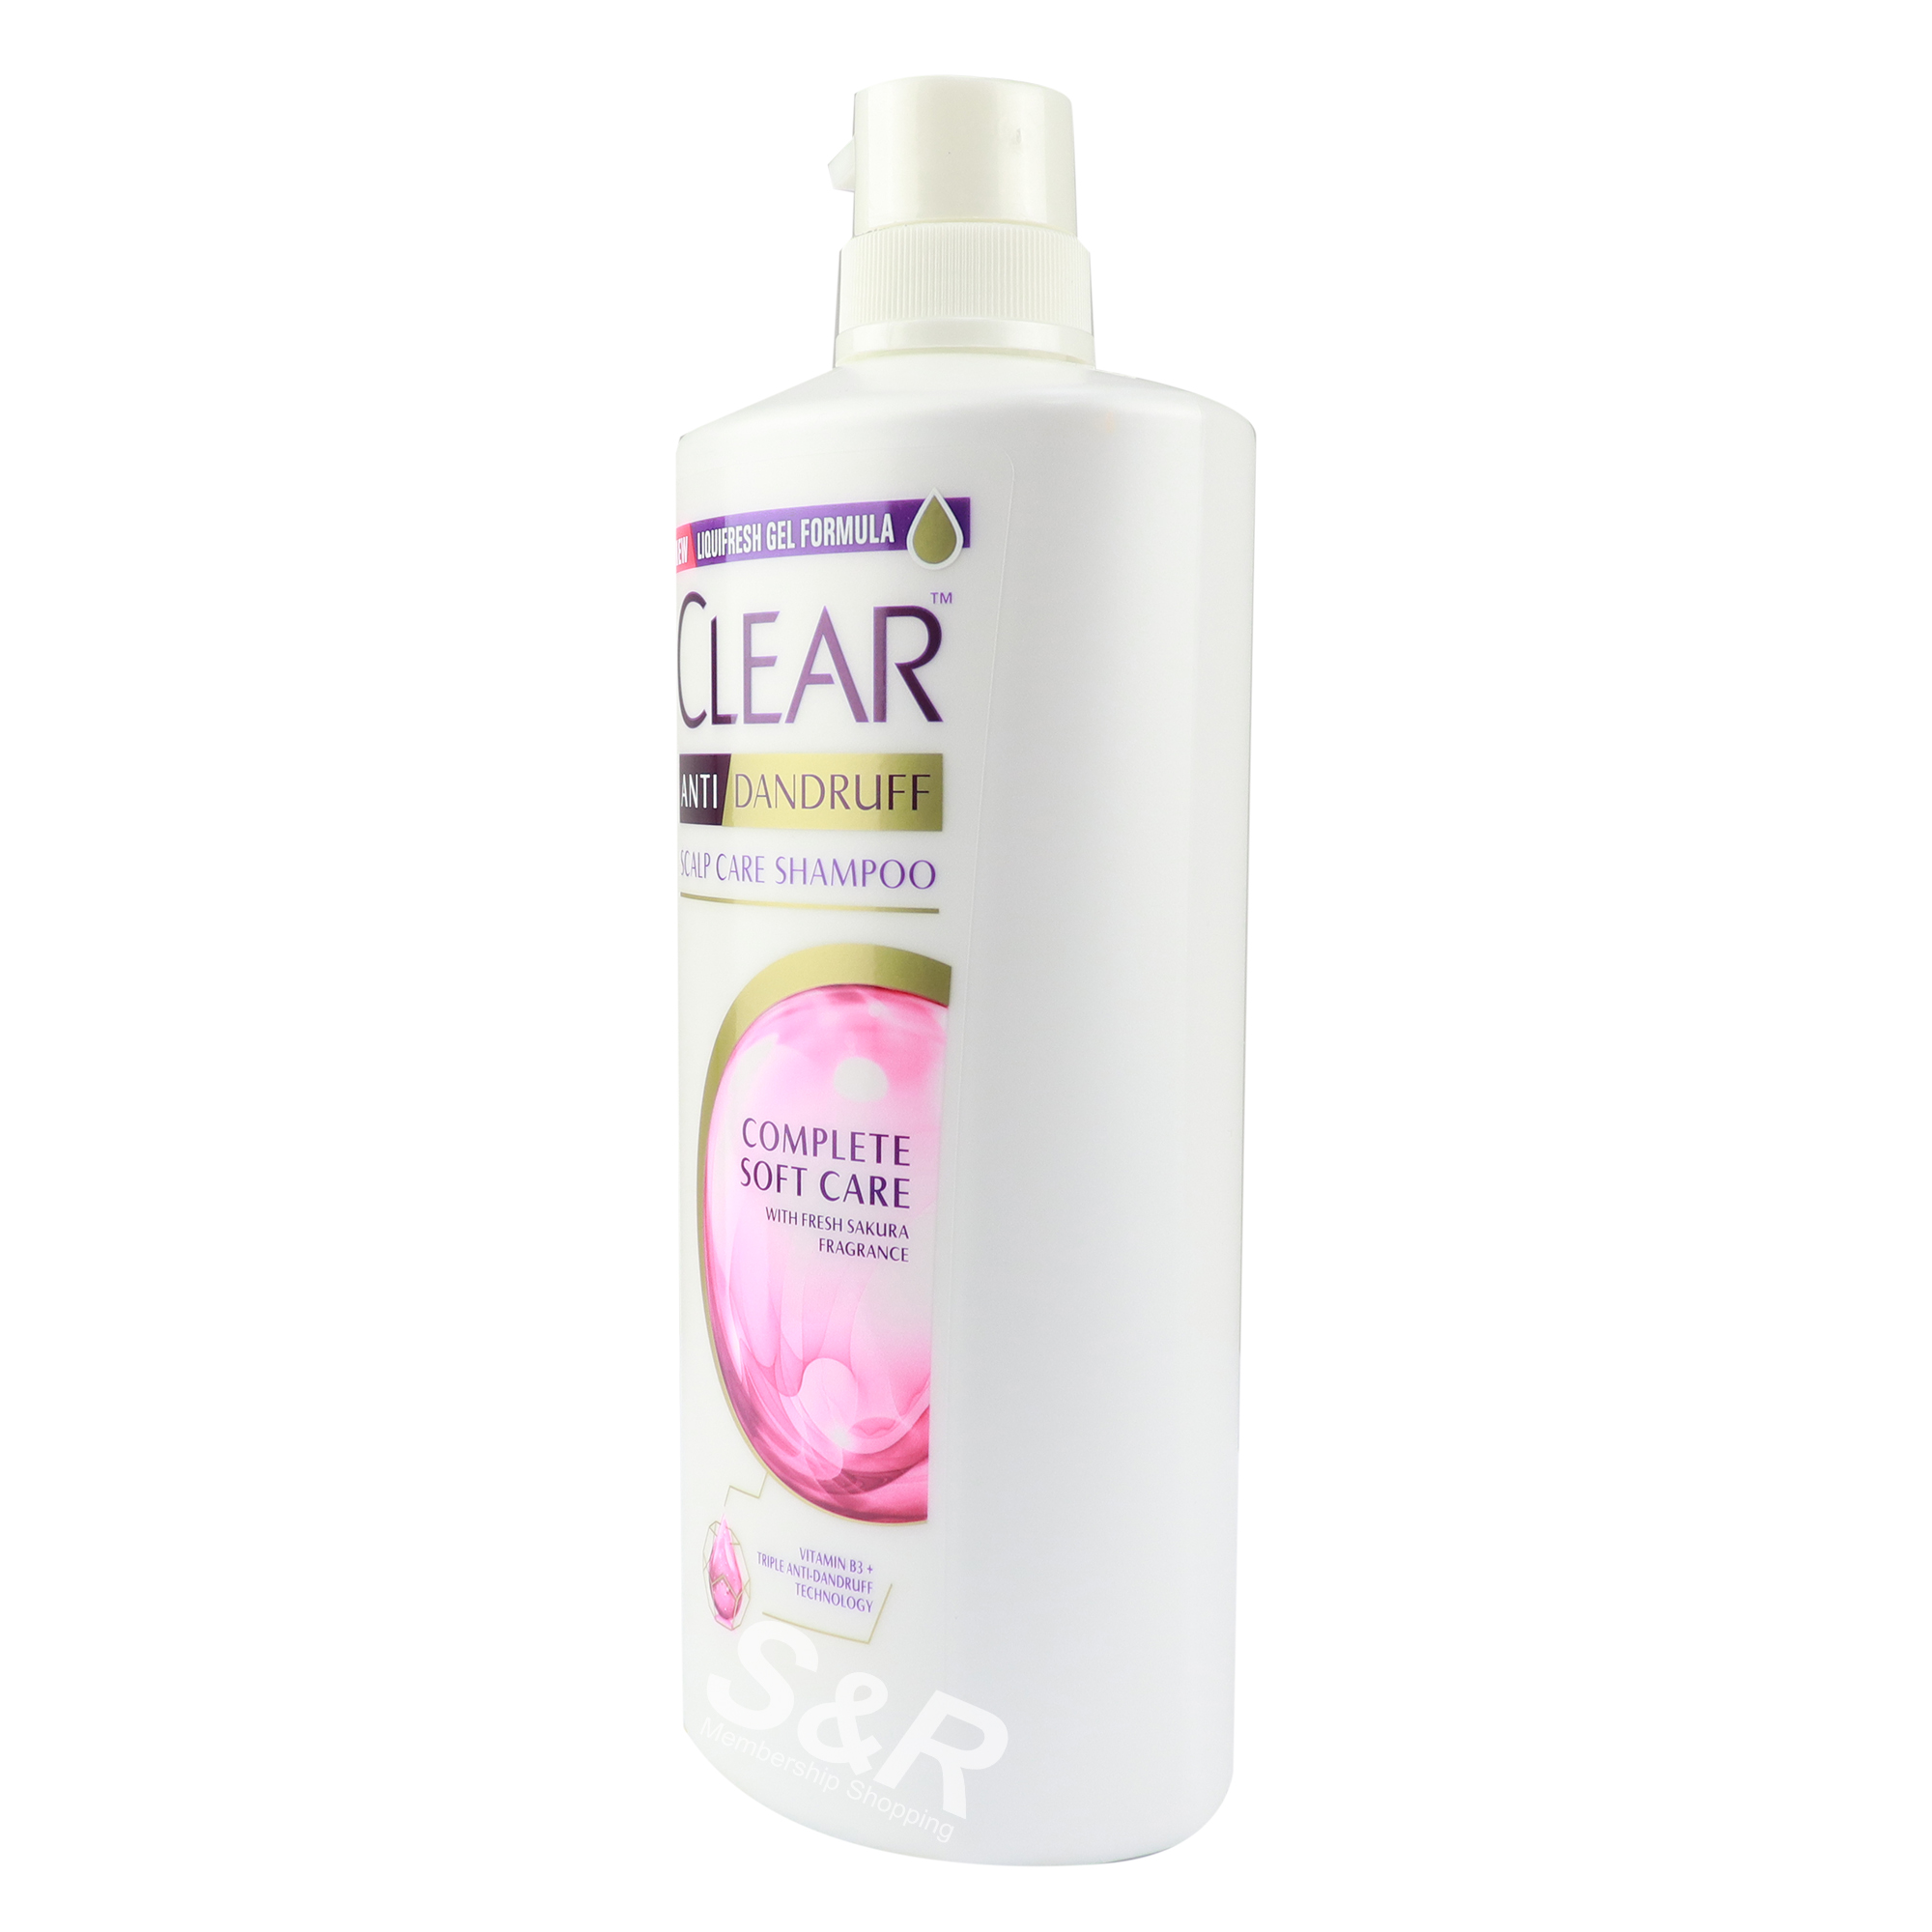 Clear Anti-Dandruff Scalp Care Shampoo 880mL